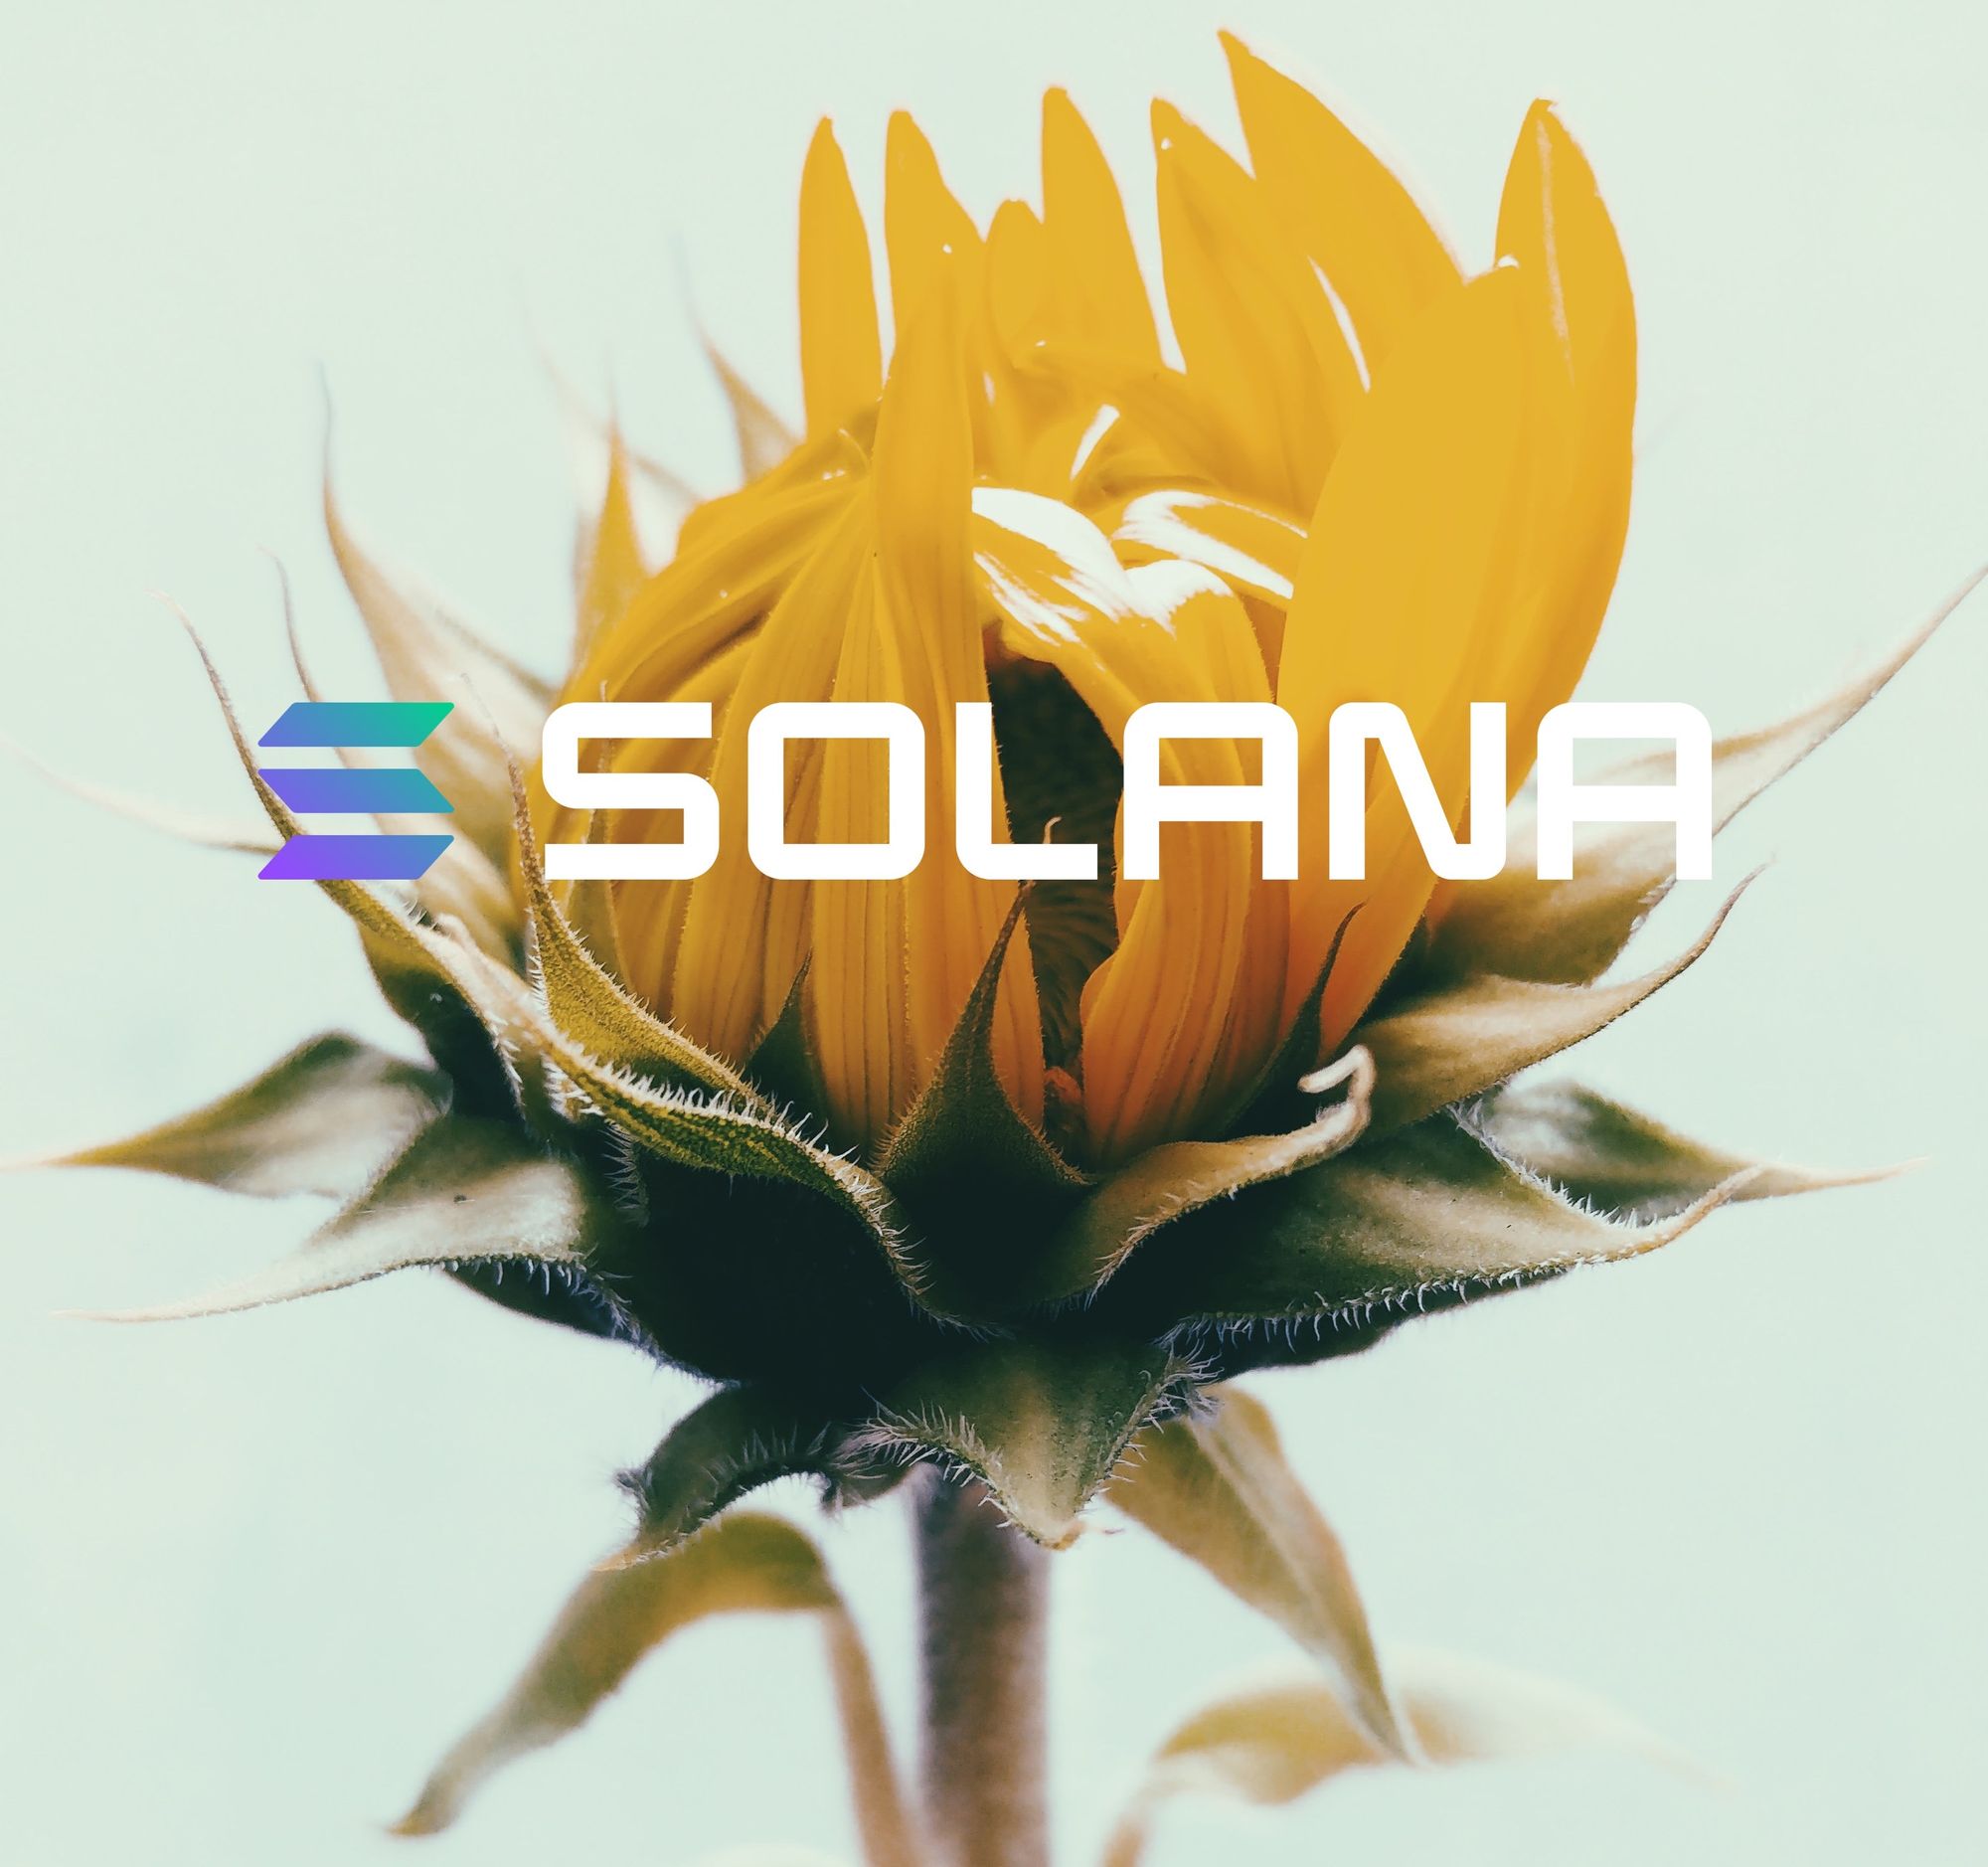 The Solana Scene